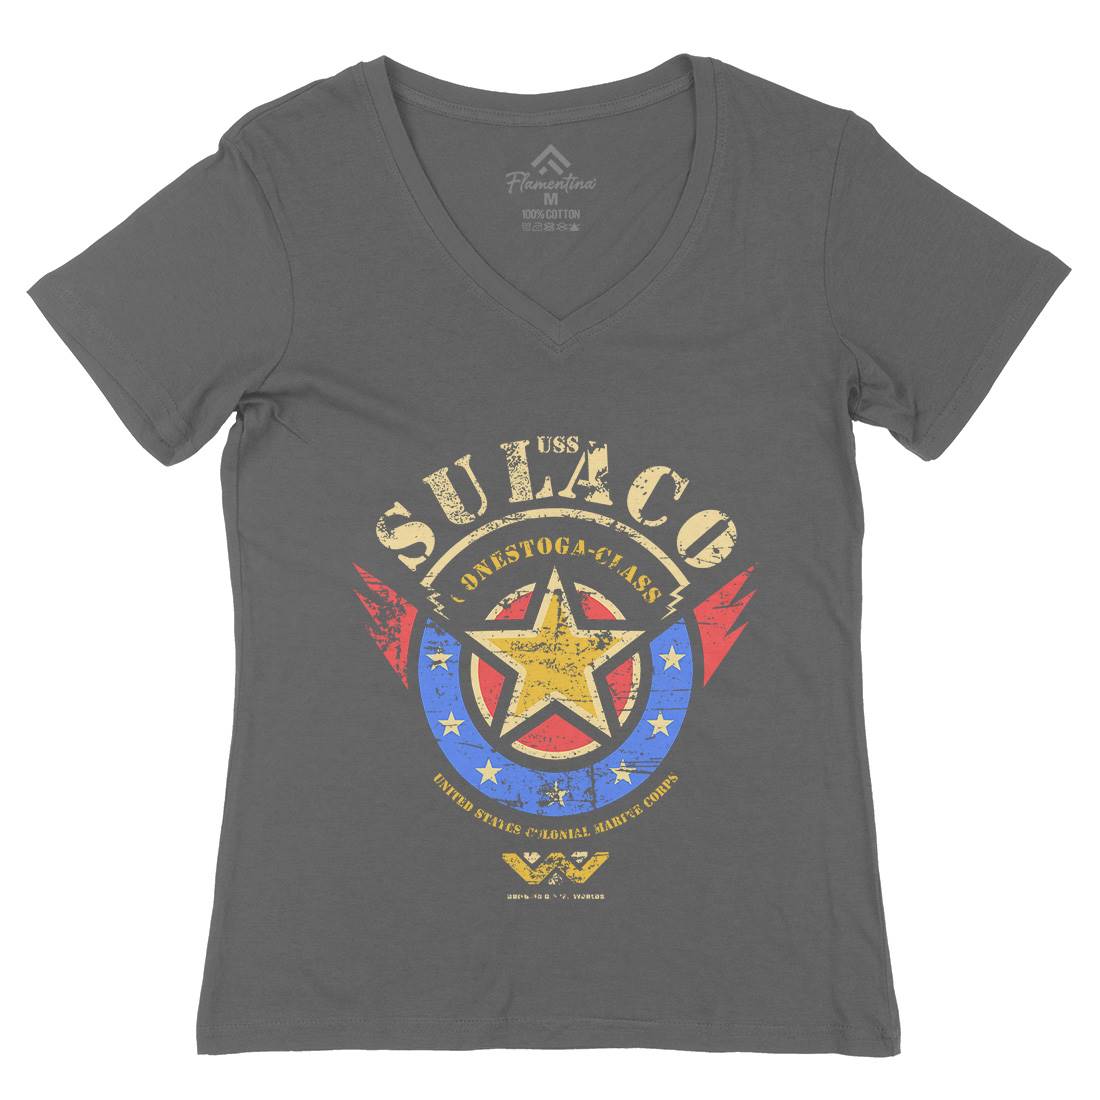 Uss Sulaco Womens Organic V-Neck T-Shirt Space D275